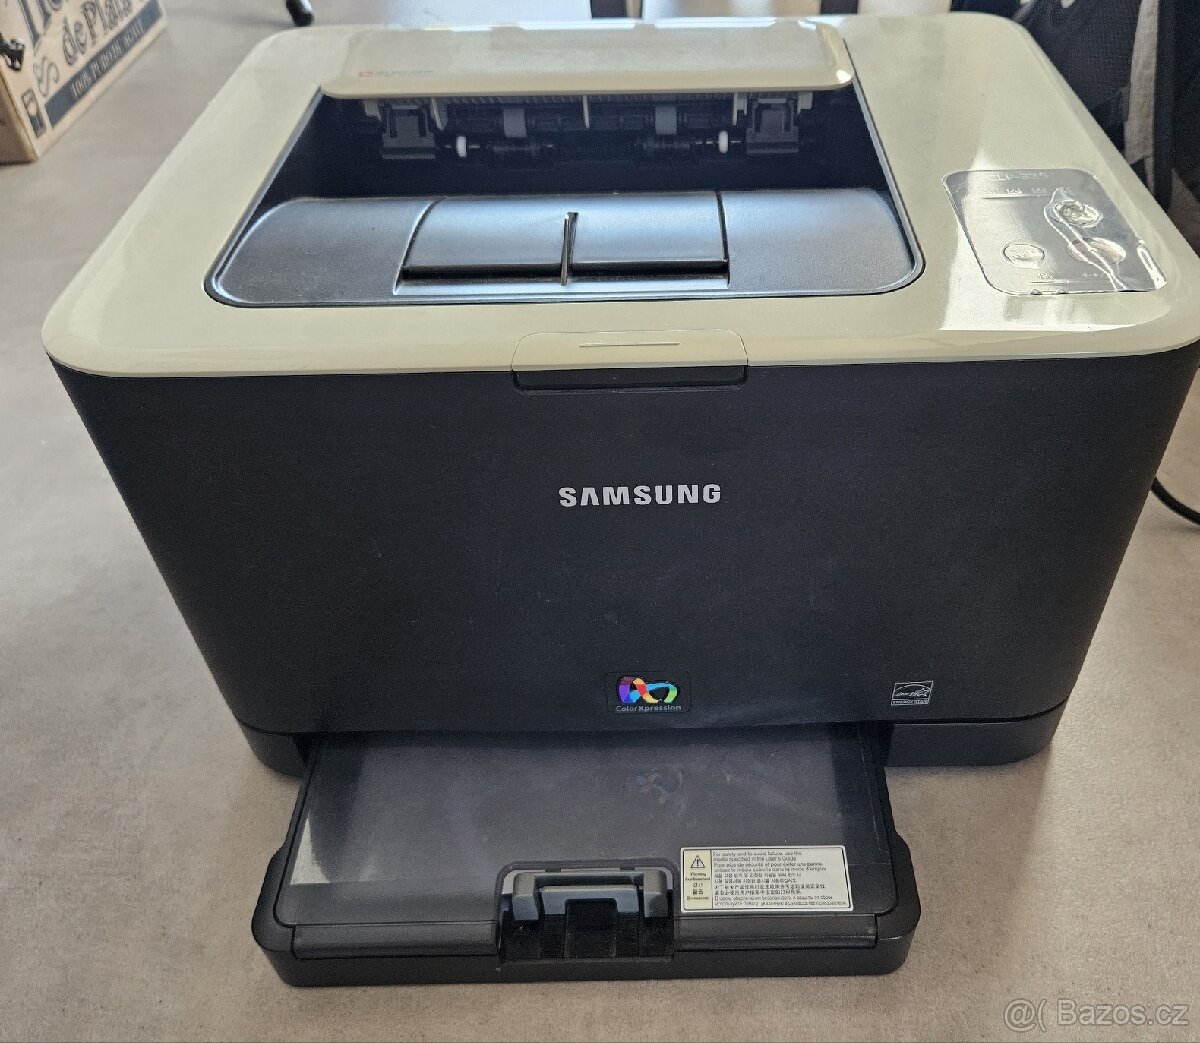 Laserova tiskarna Samsung - castecne funkcni